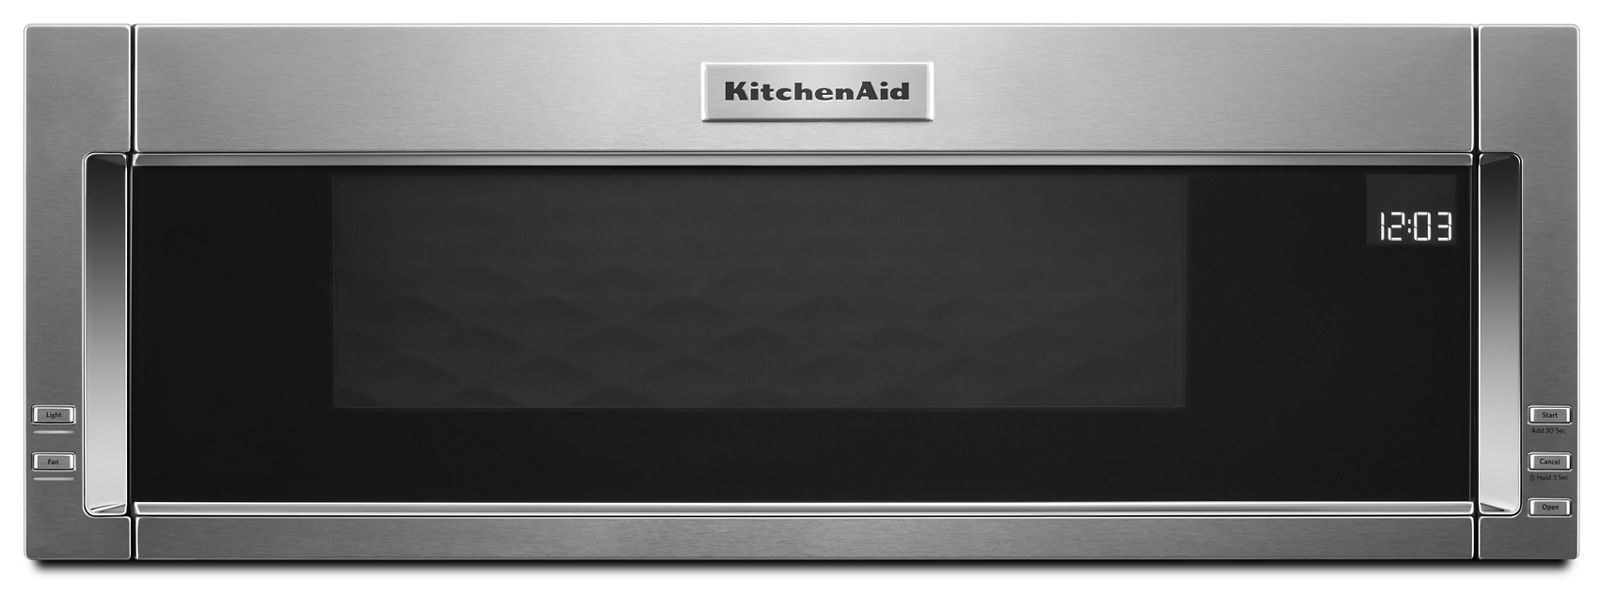 KitchenAid 1.1 cu. ft. Over the Range Low Profile Microwave Hood